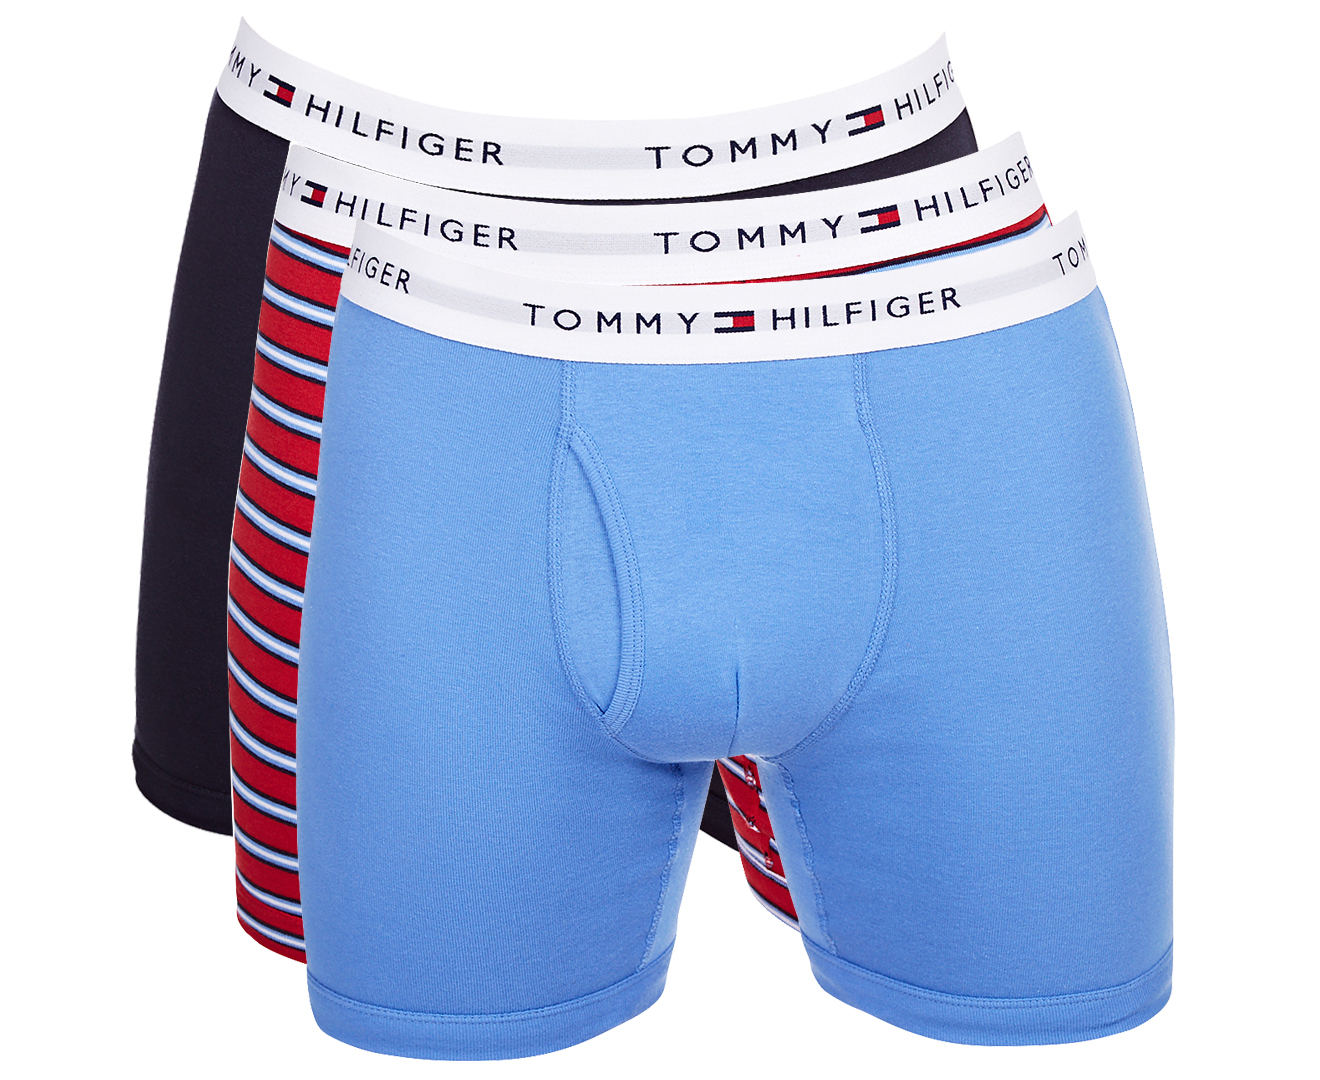 Tommy Hilfiger Men's Classic Boxer Brief 3-Pack - Multi